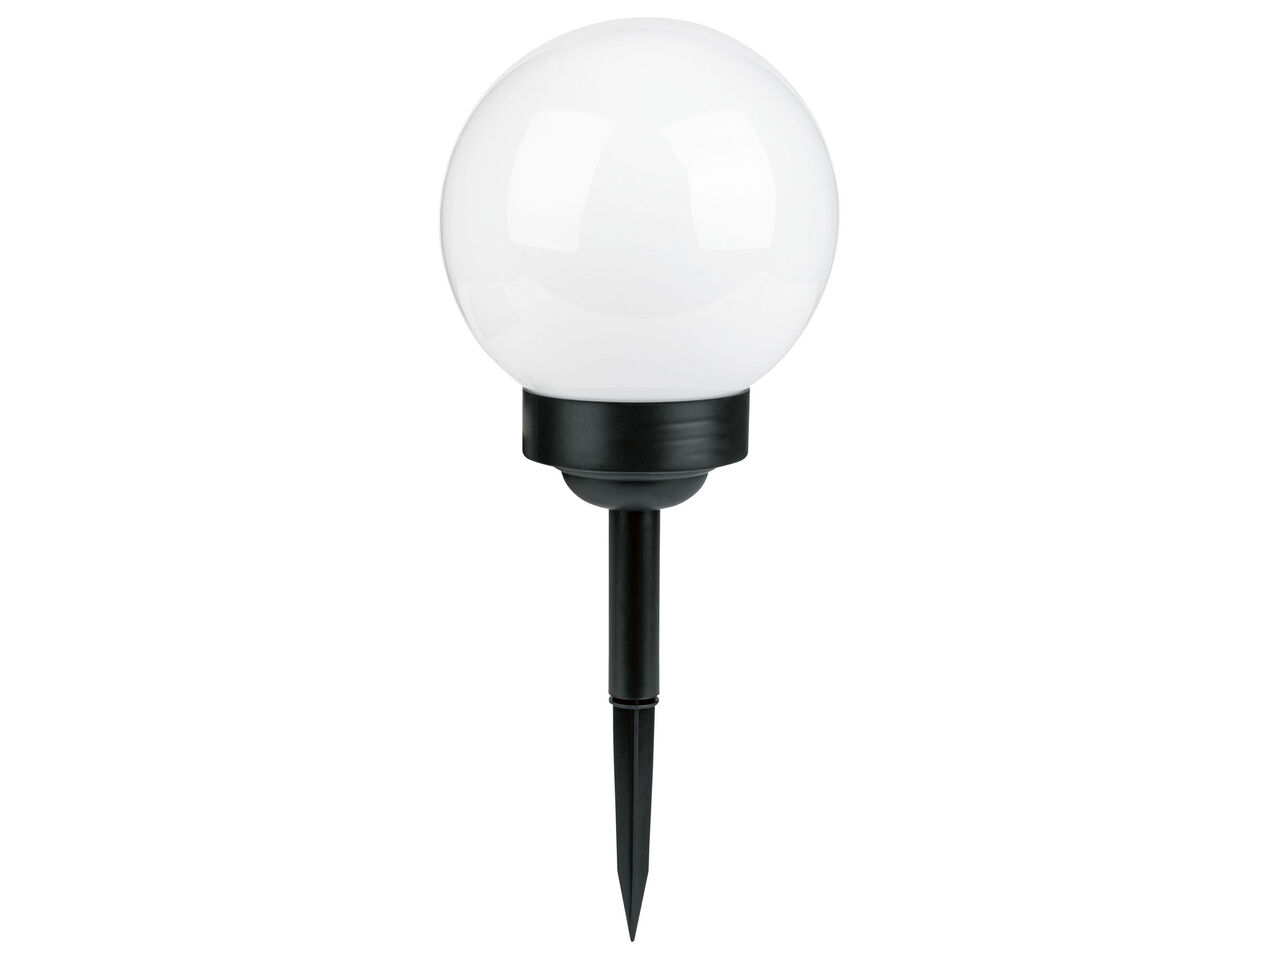 LIVARNO HOME® Lampa solarna LED Ø 20 cm , cena 24,99 PLN 

- czas świecenia: ...